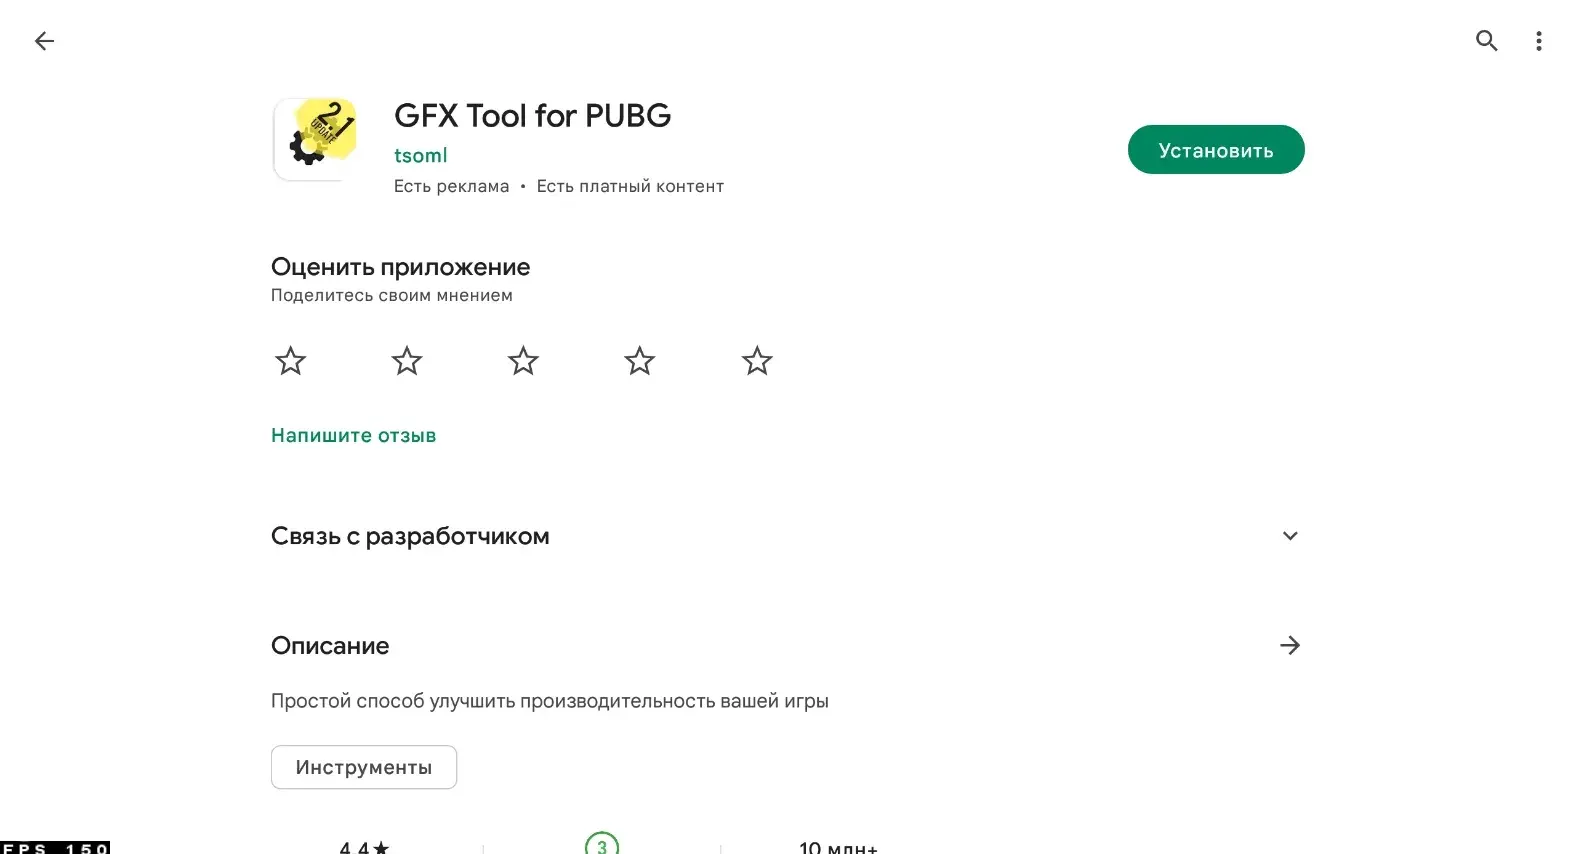 Download GFX Tool